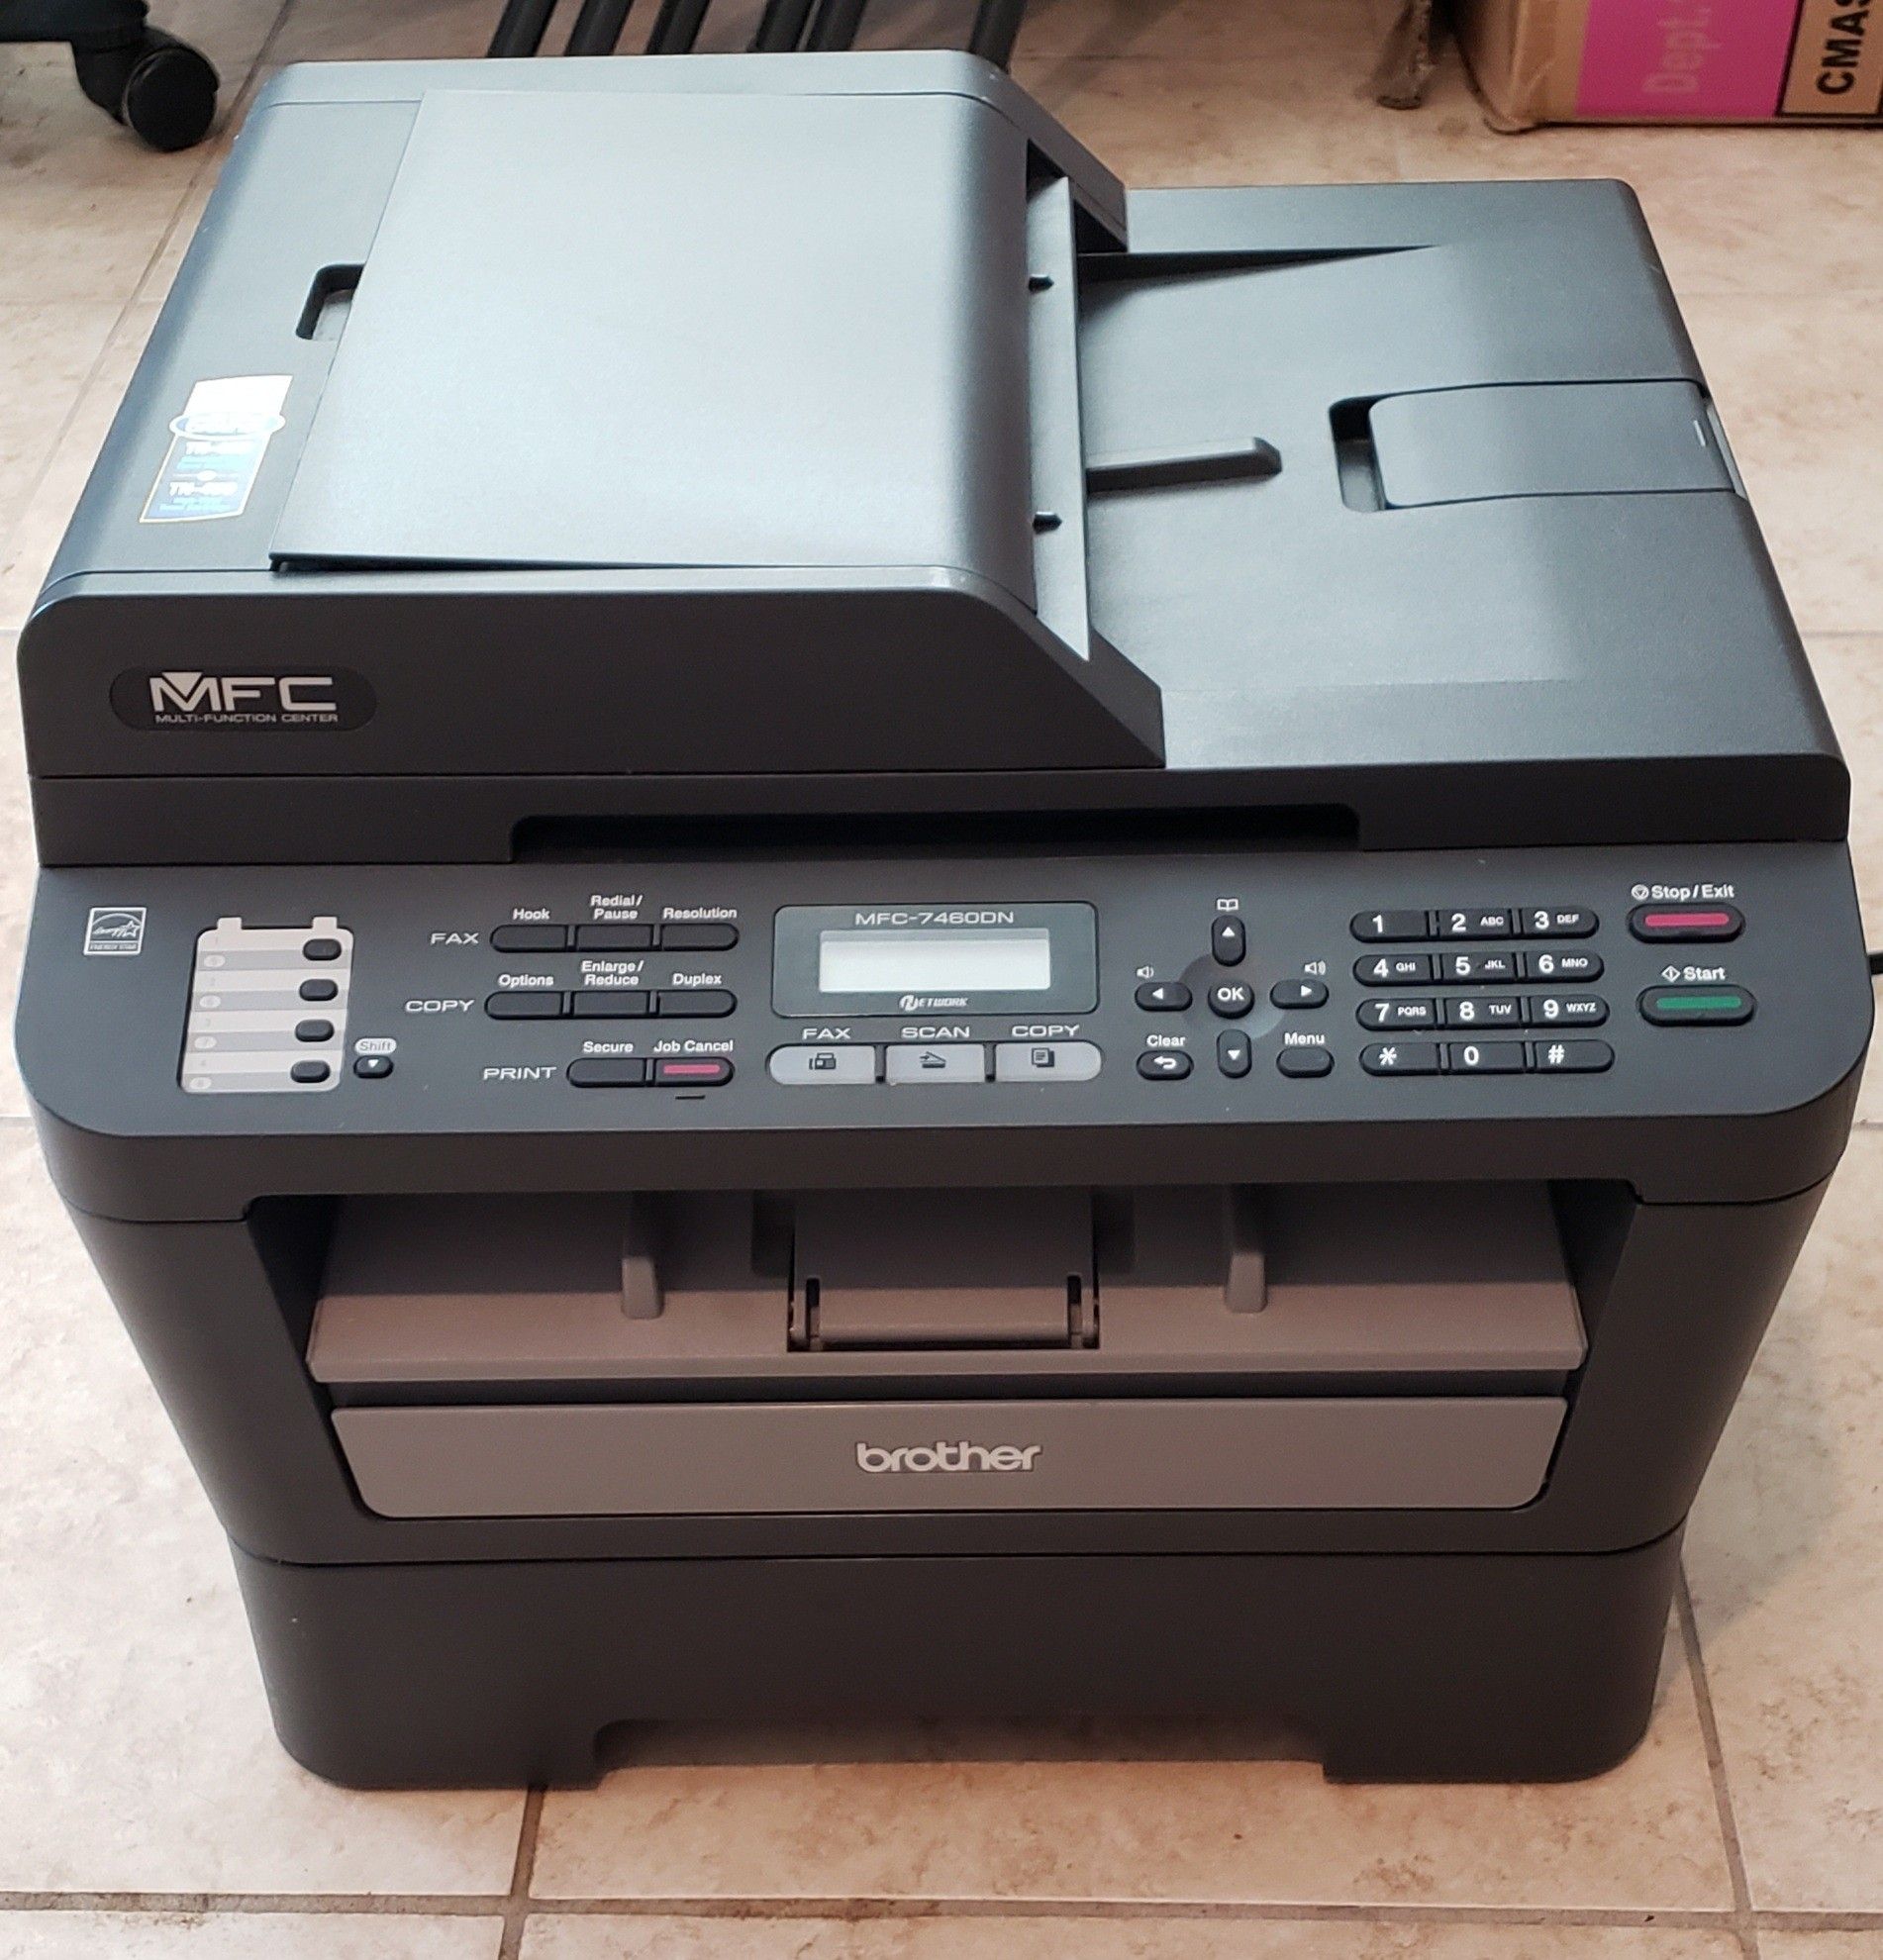 Brother printer MFC-7460DN (TN-420 or TN450 toner)